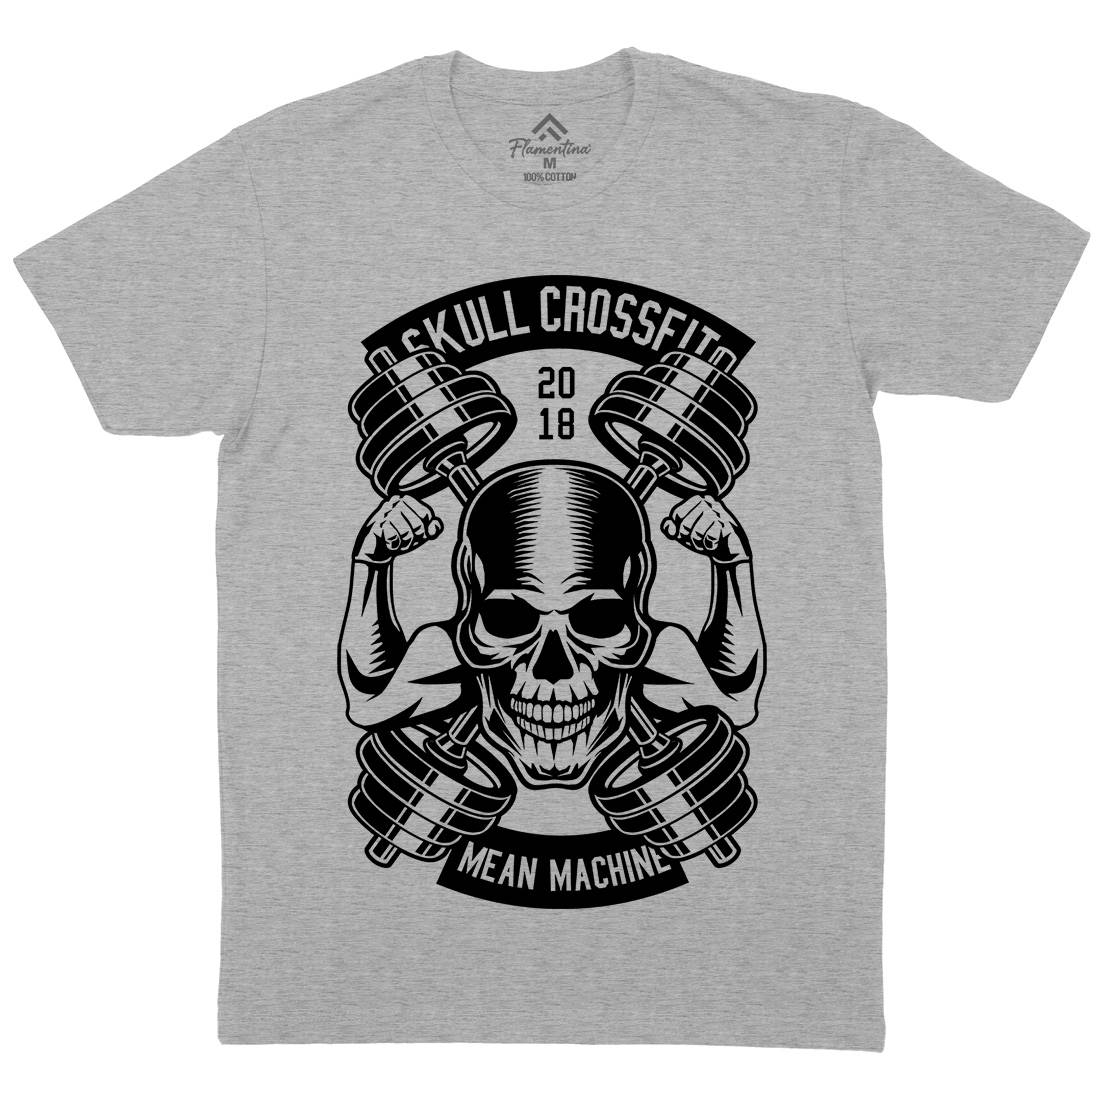 Skull Cross Fit Mens Crew Neck T-Shirt Gym B627